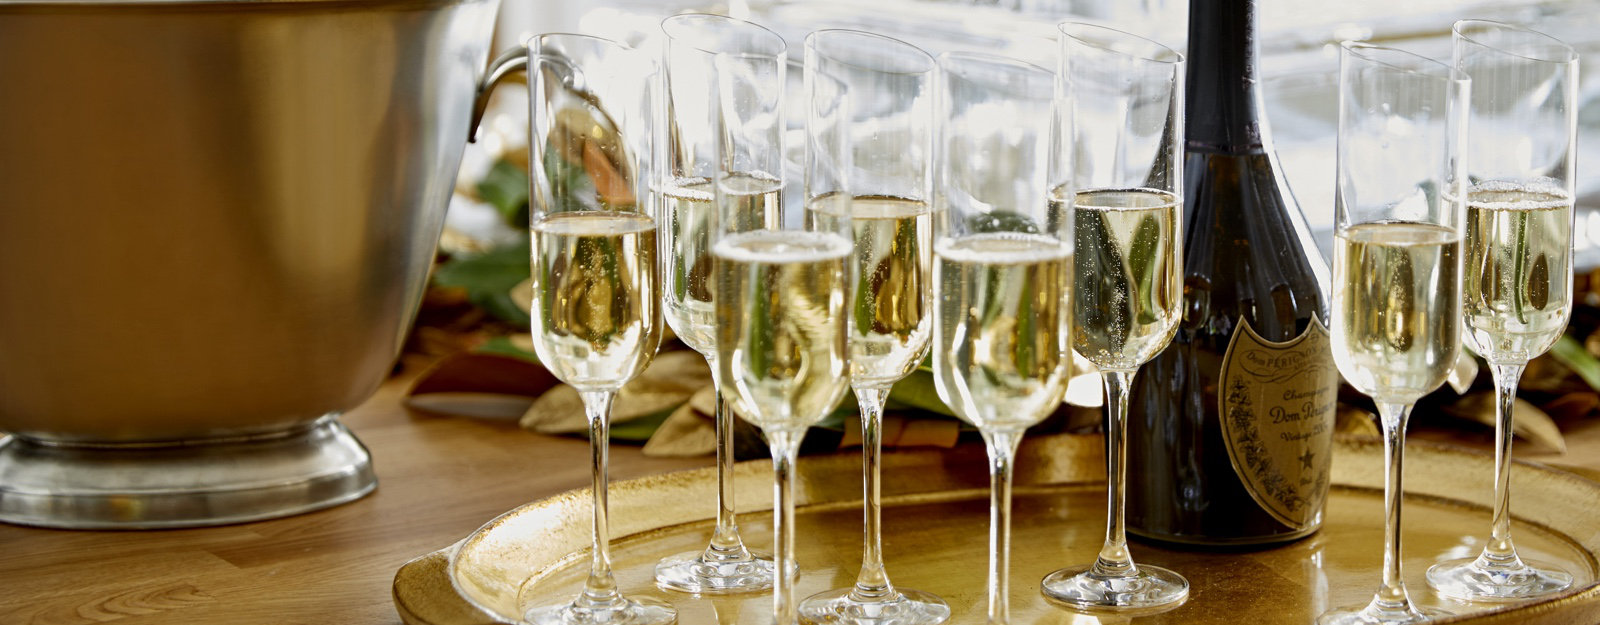 Kim Seybert - Orion Wine Glass - Set of 4 - Gold